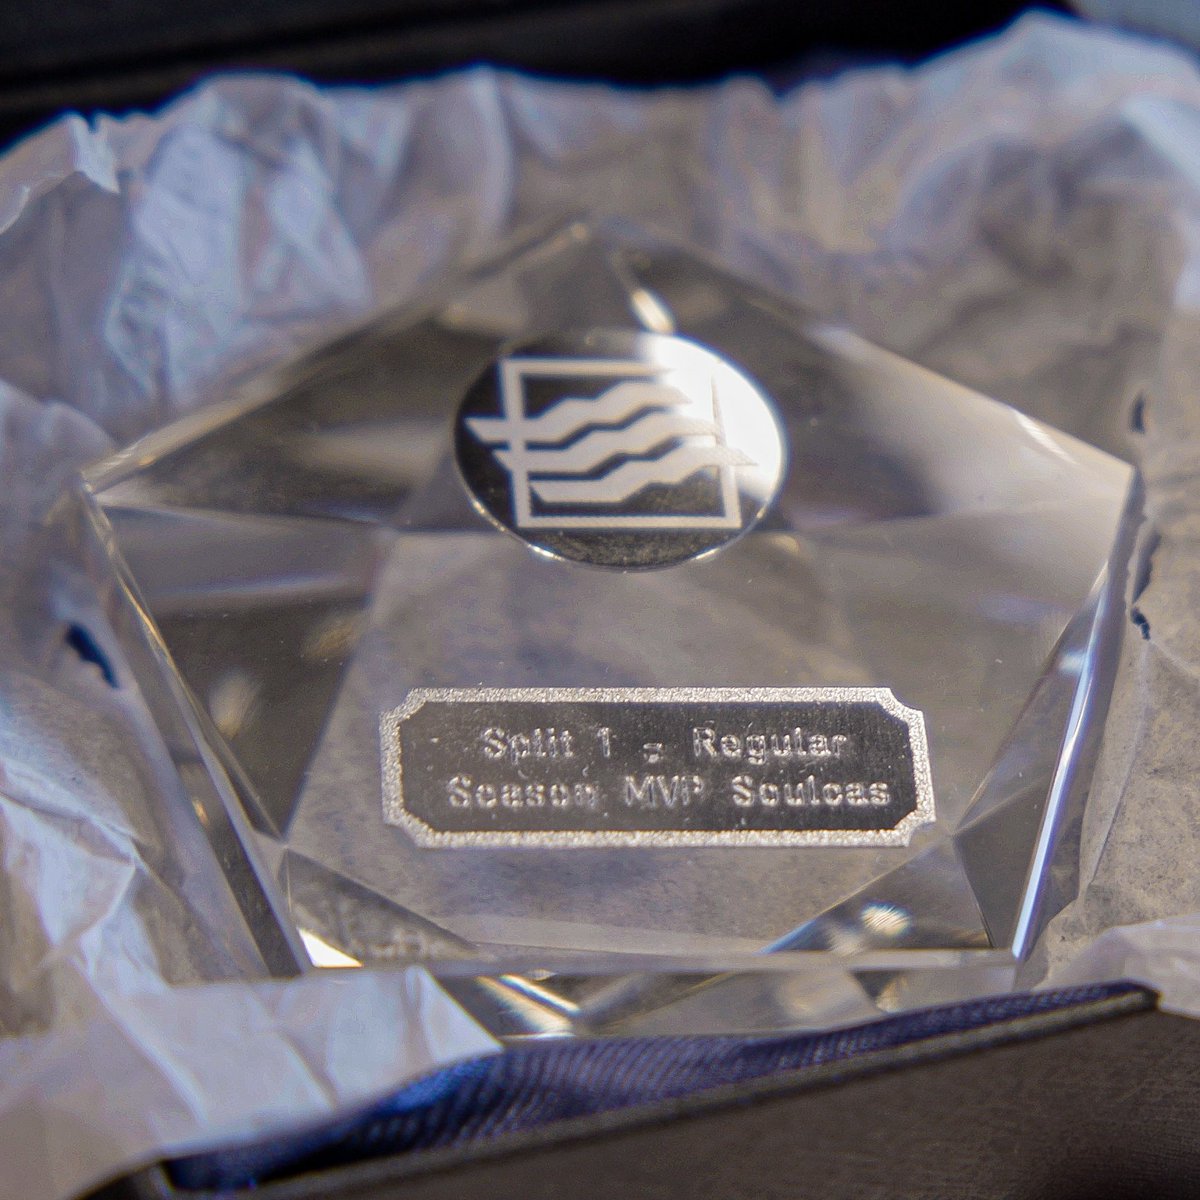 A little gift for the Challengers North Split 1 Regular Season MVP - @soulcas_  

Congratulations! 🎉 

#Pathfinders // #ChallengersEMEA